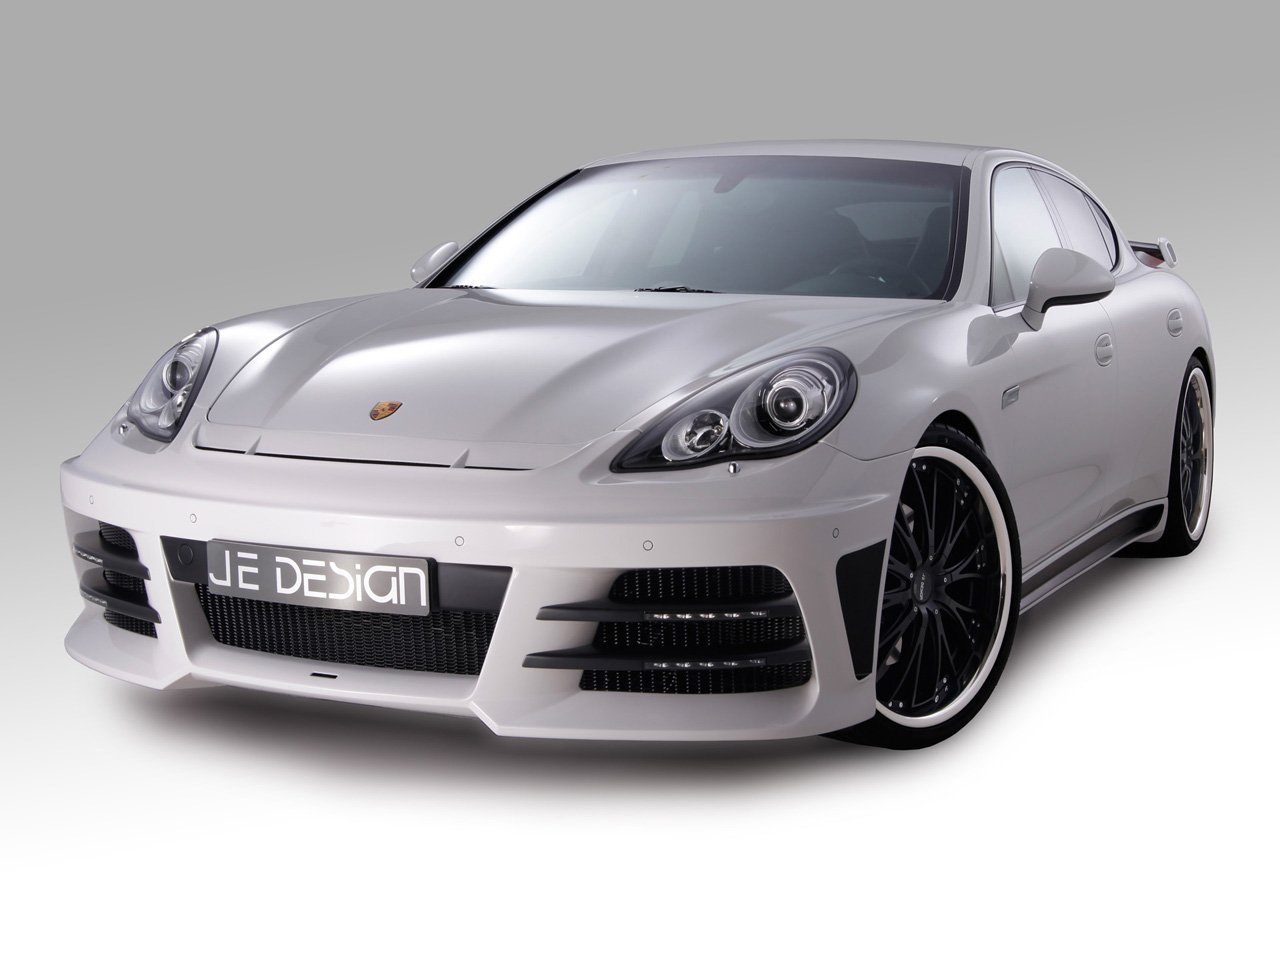 2012 JE Design Porsche Panamera